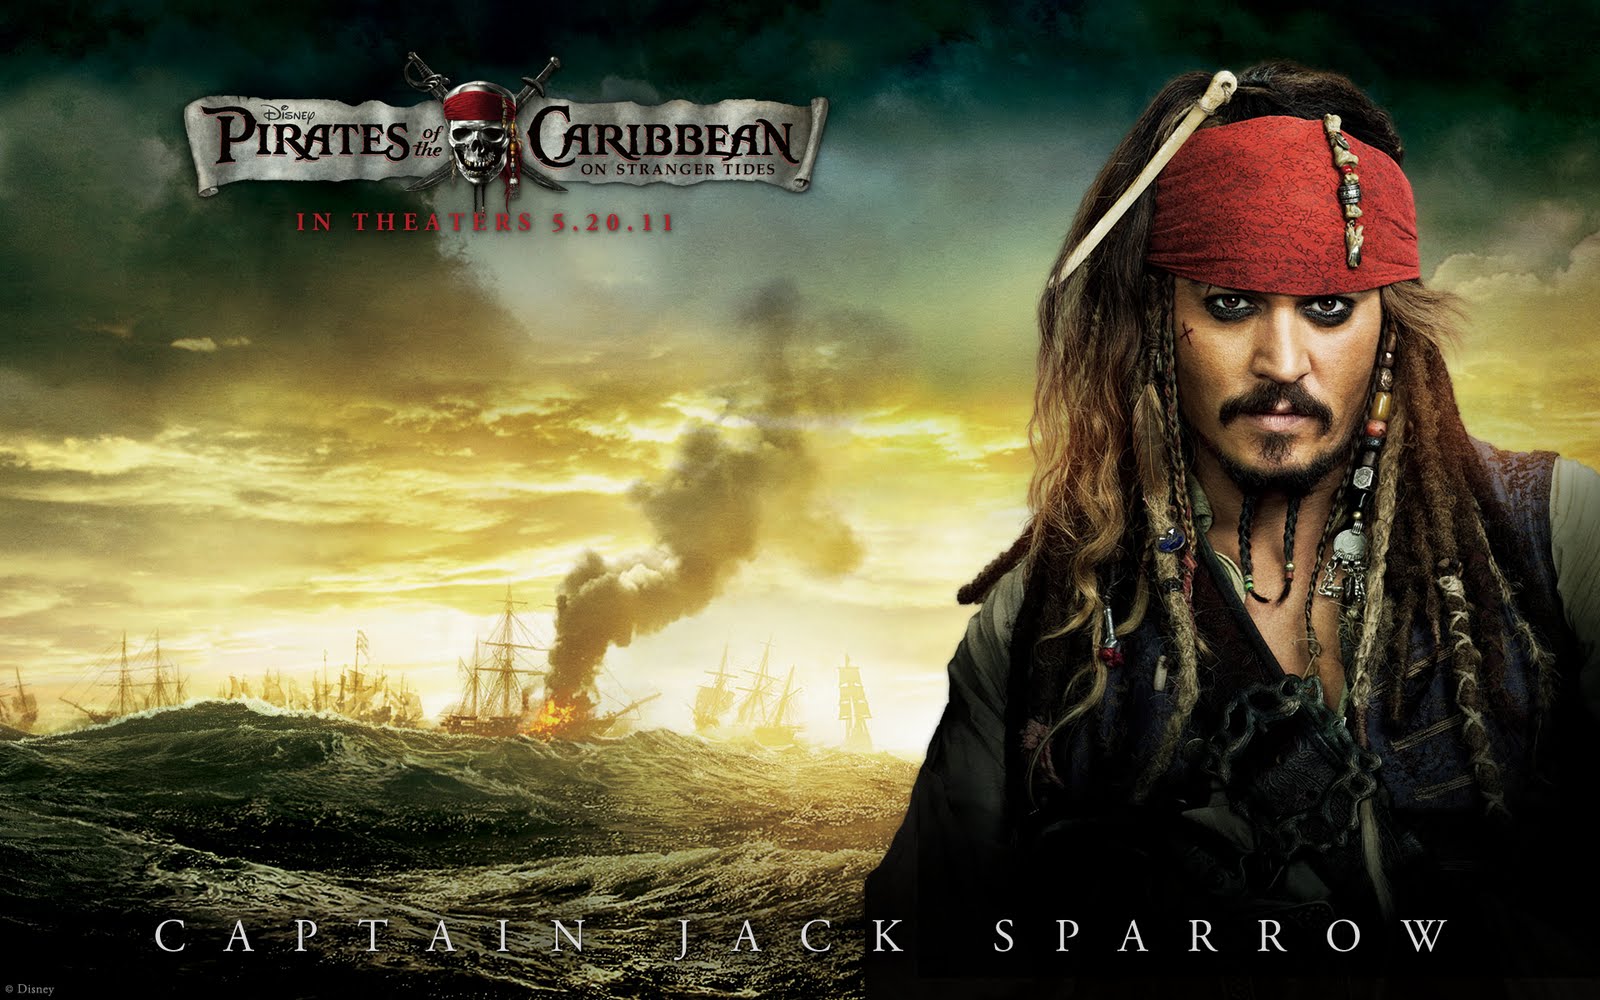 http://2.bp.blogspot.com/-EszM55RW7lw/Ta3-Px_TGAI/AAAAAAAABWg/DmEQcfYsSqk/s1600/Pirates+of+the+Caribbean_On+Stranger+Tides_Jack+Sparrow.jpg